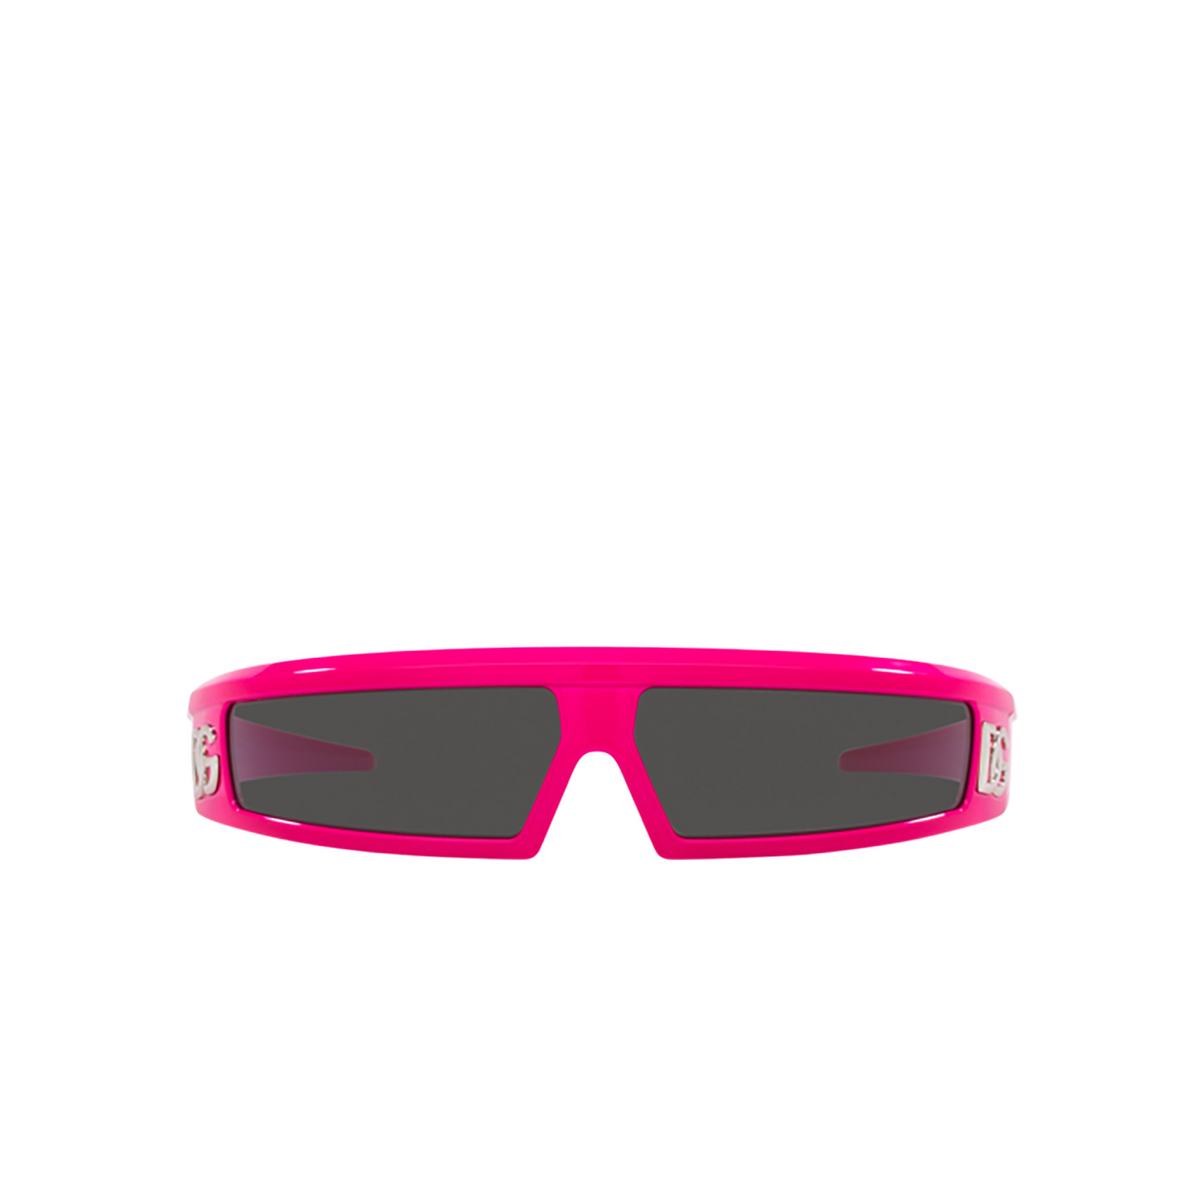 Dolce & Gabbana DG6181 Sunglasses 309687 Pink - front view